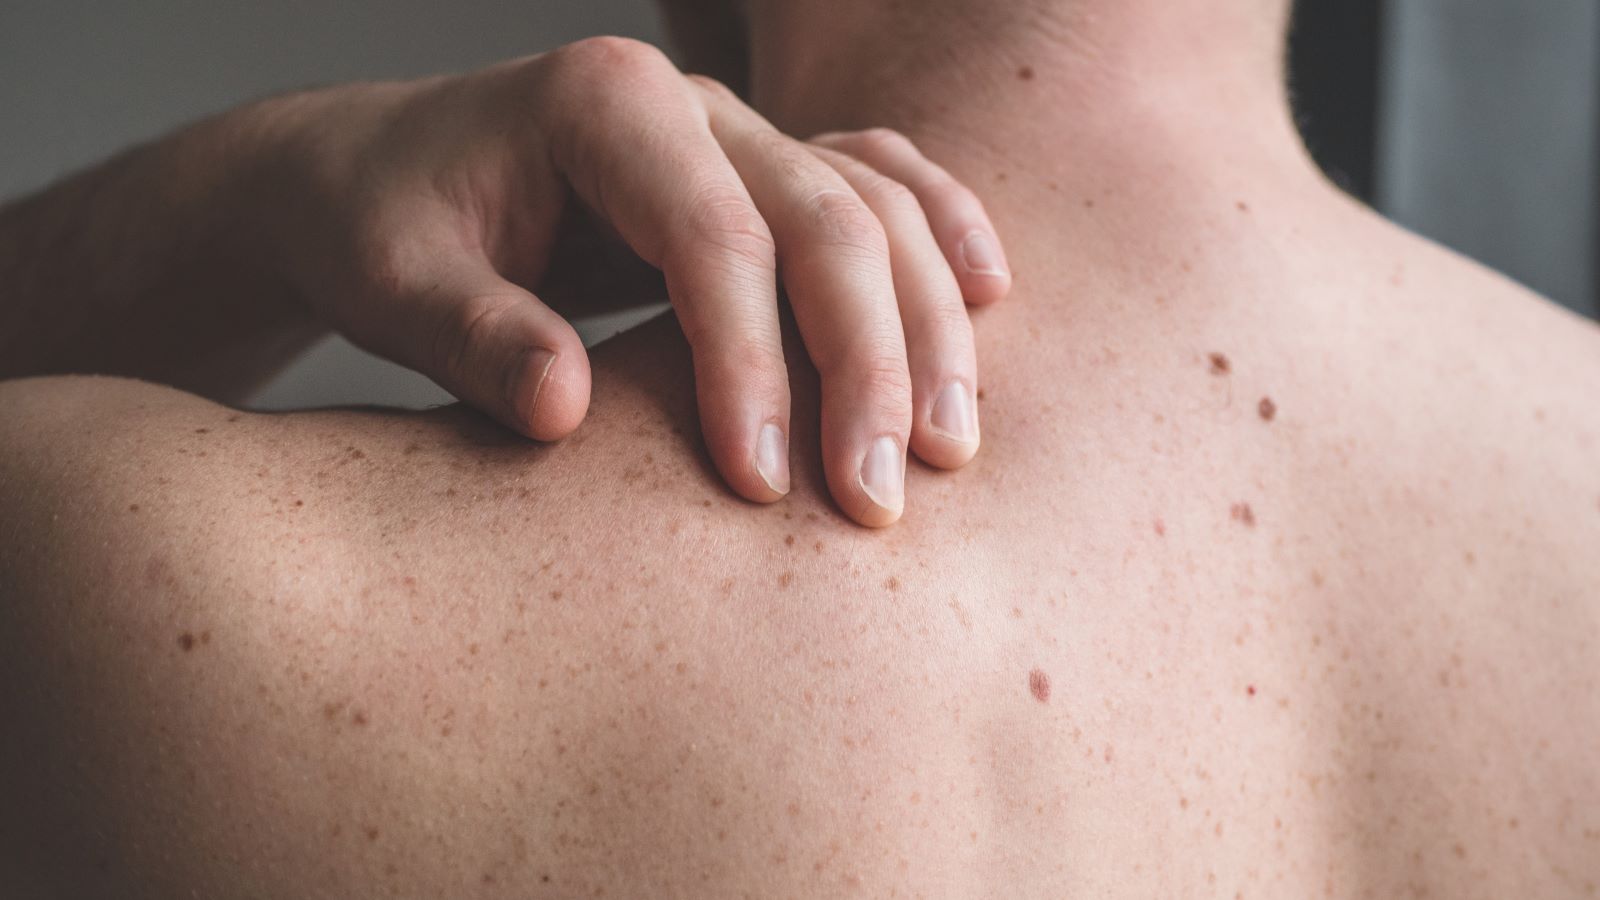 5 Risk Factors for Skin Cancer You Should Know